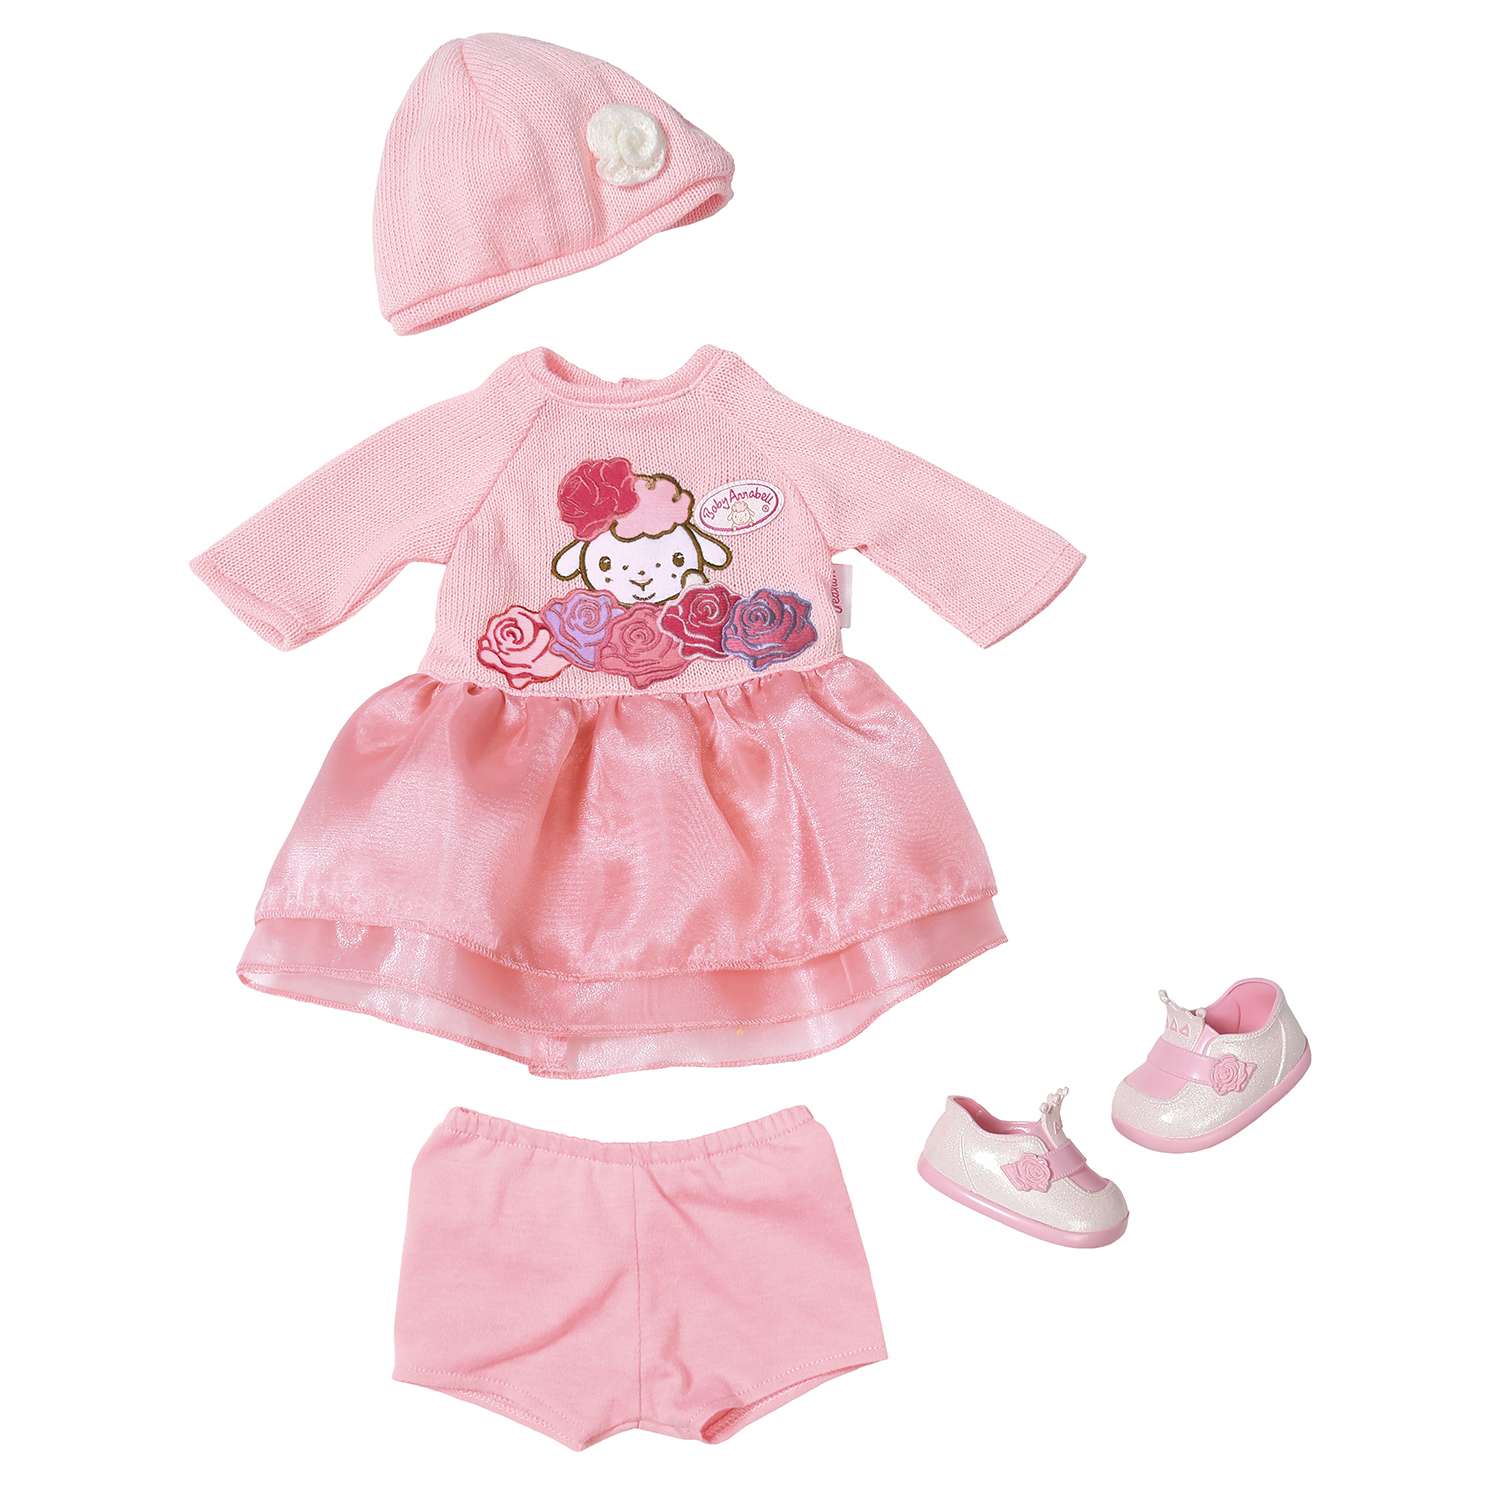 Одежда для кукол Zapf Creation Baby Annabell вязанная 4предмета 701-966 701-966 - фото 1